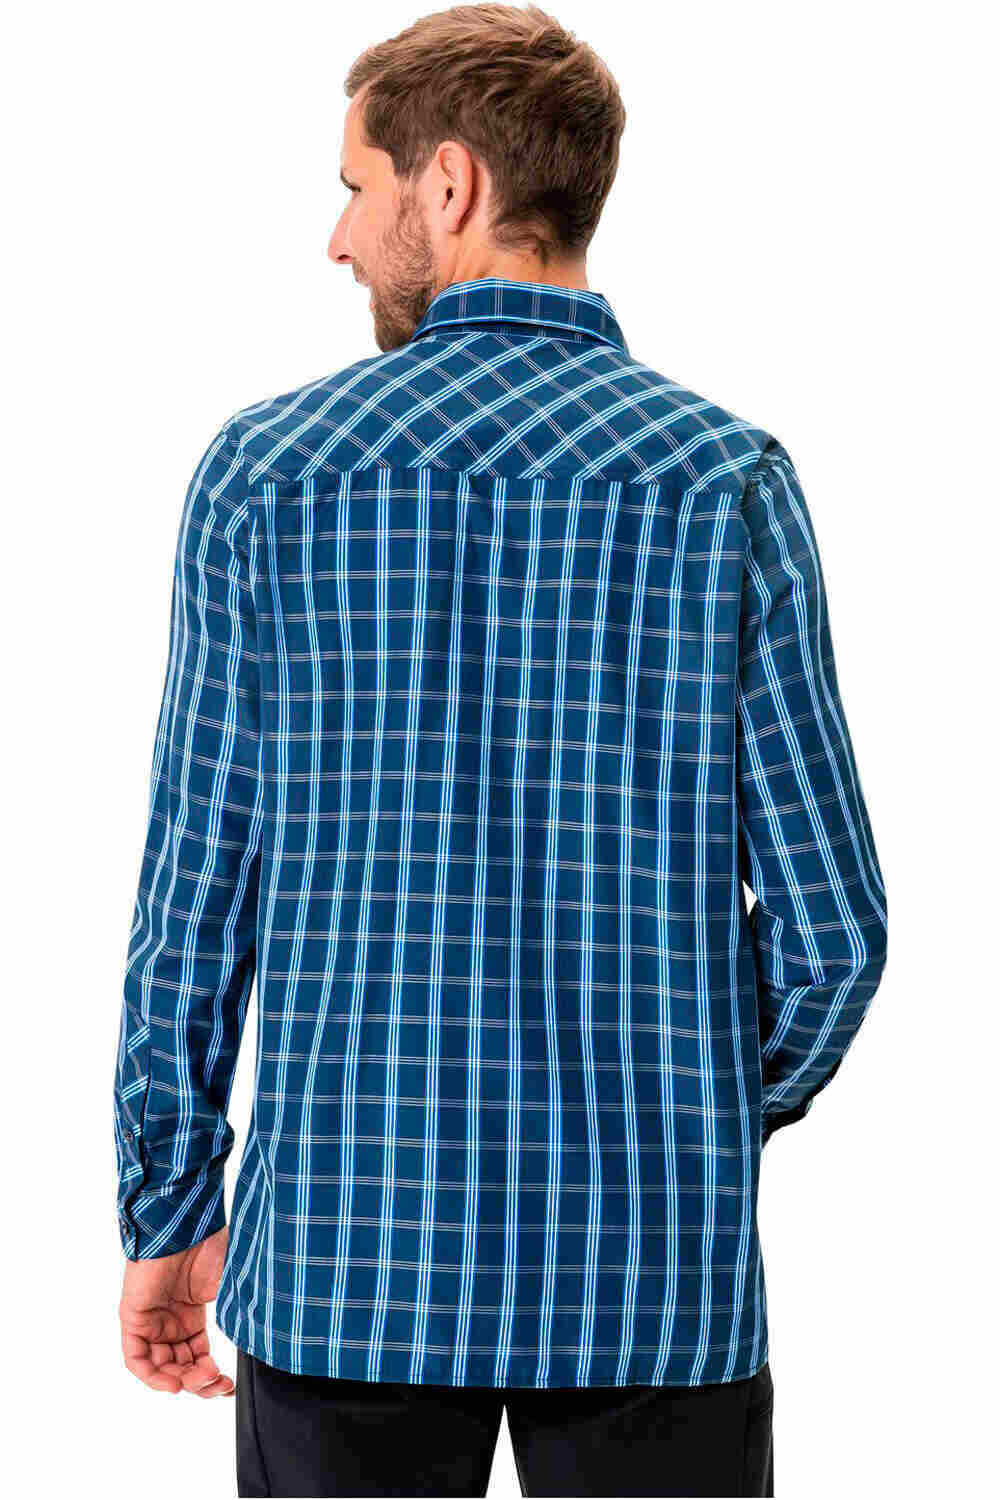 Vaude camisa montaña manga larga hombre Men  s Albsteig LS Shirt III vista trasera